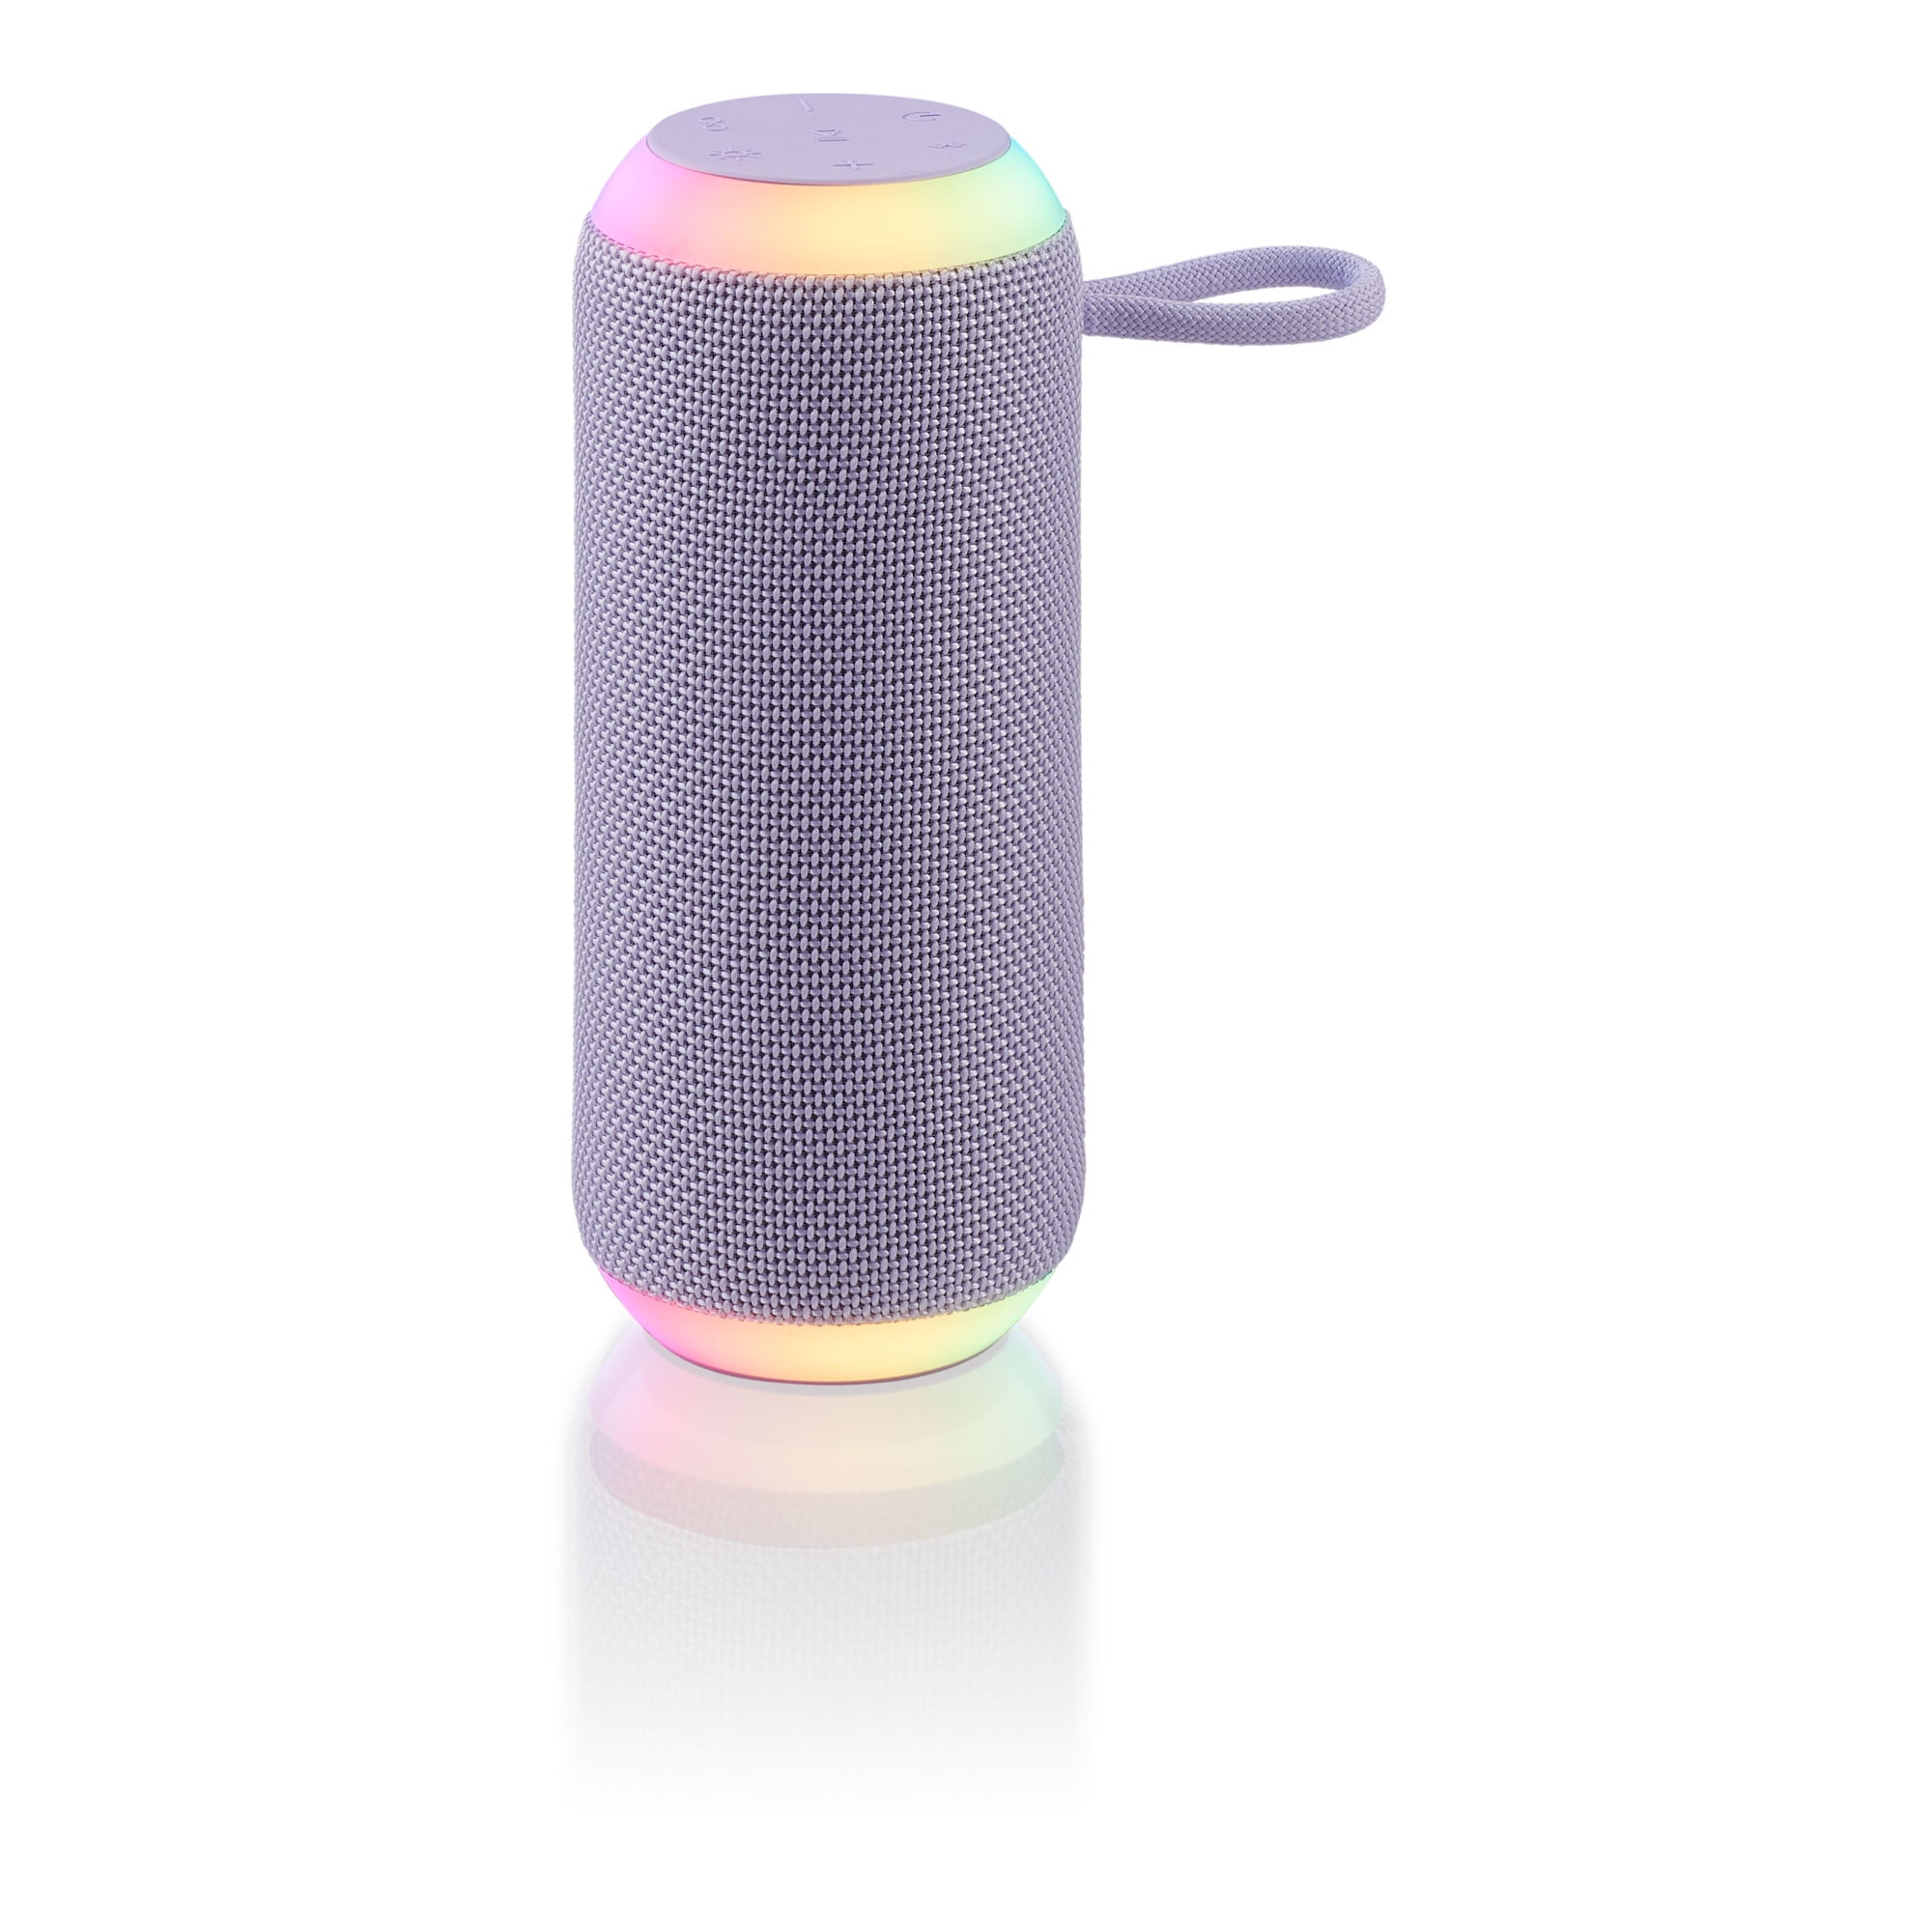 onn. Medium Rugged Speaker with LED Lighting, Lilac